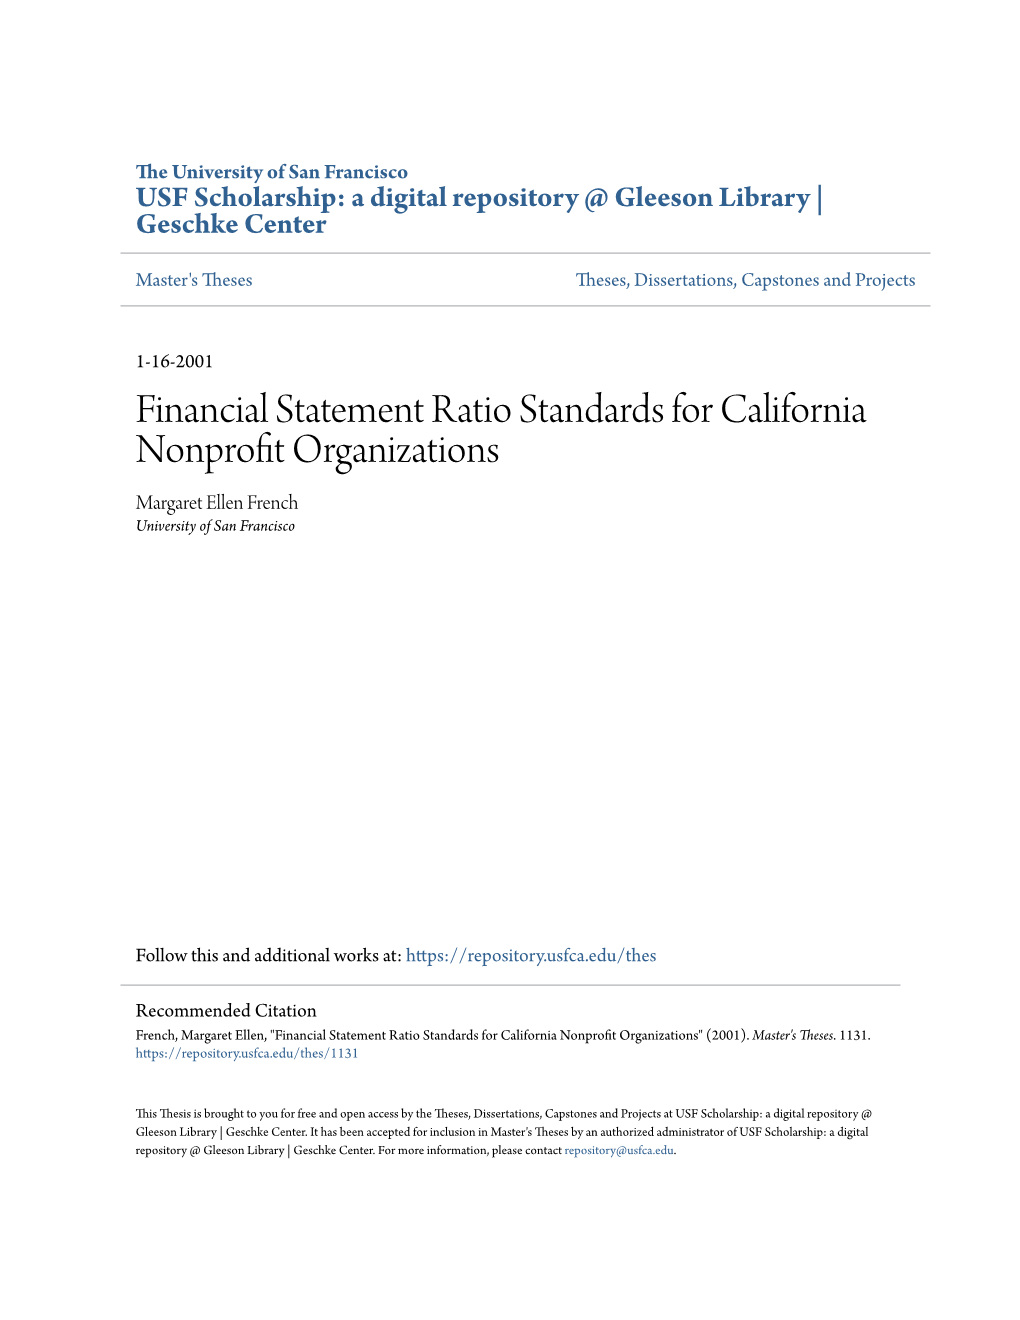 Financial Statement Ratio Standards for California Nonprofit Organizations Margaret Ellen French University of San Francisco